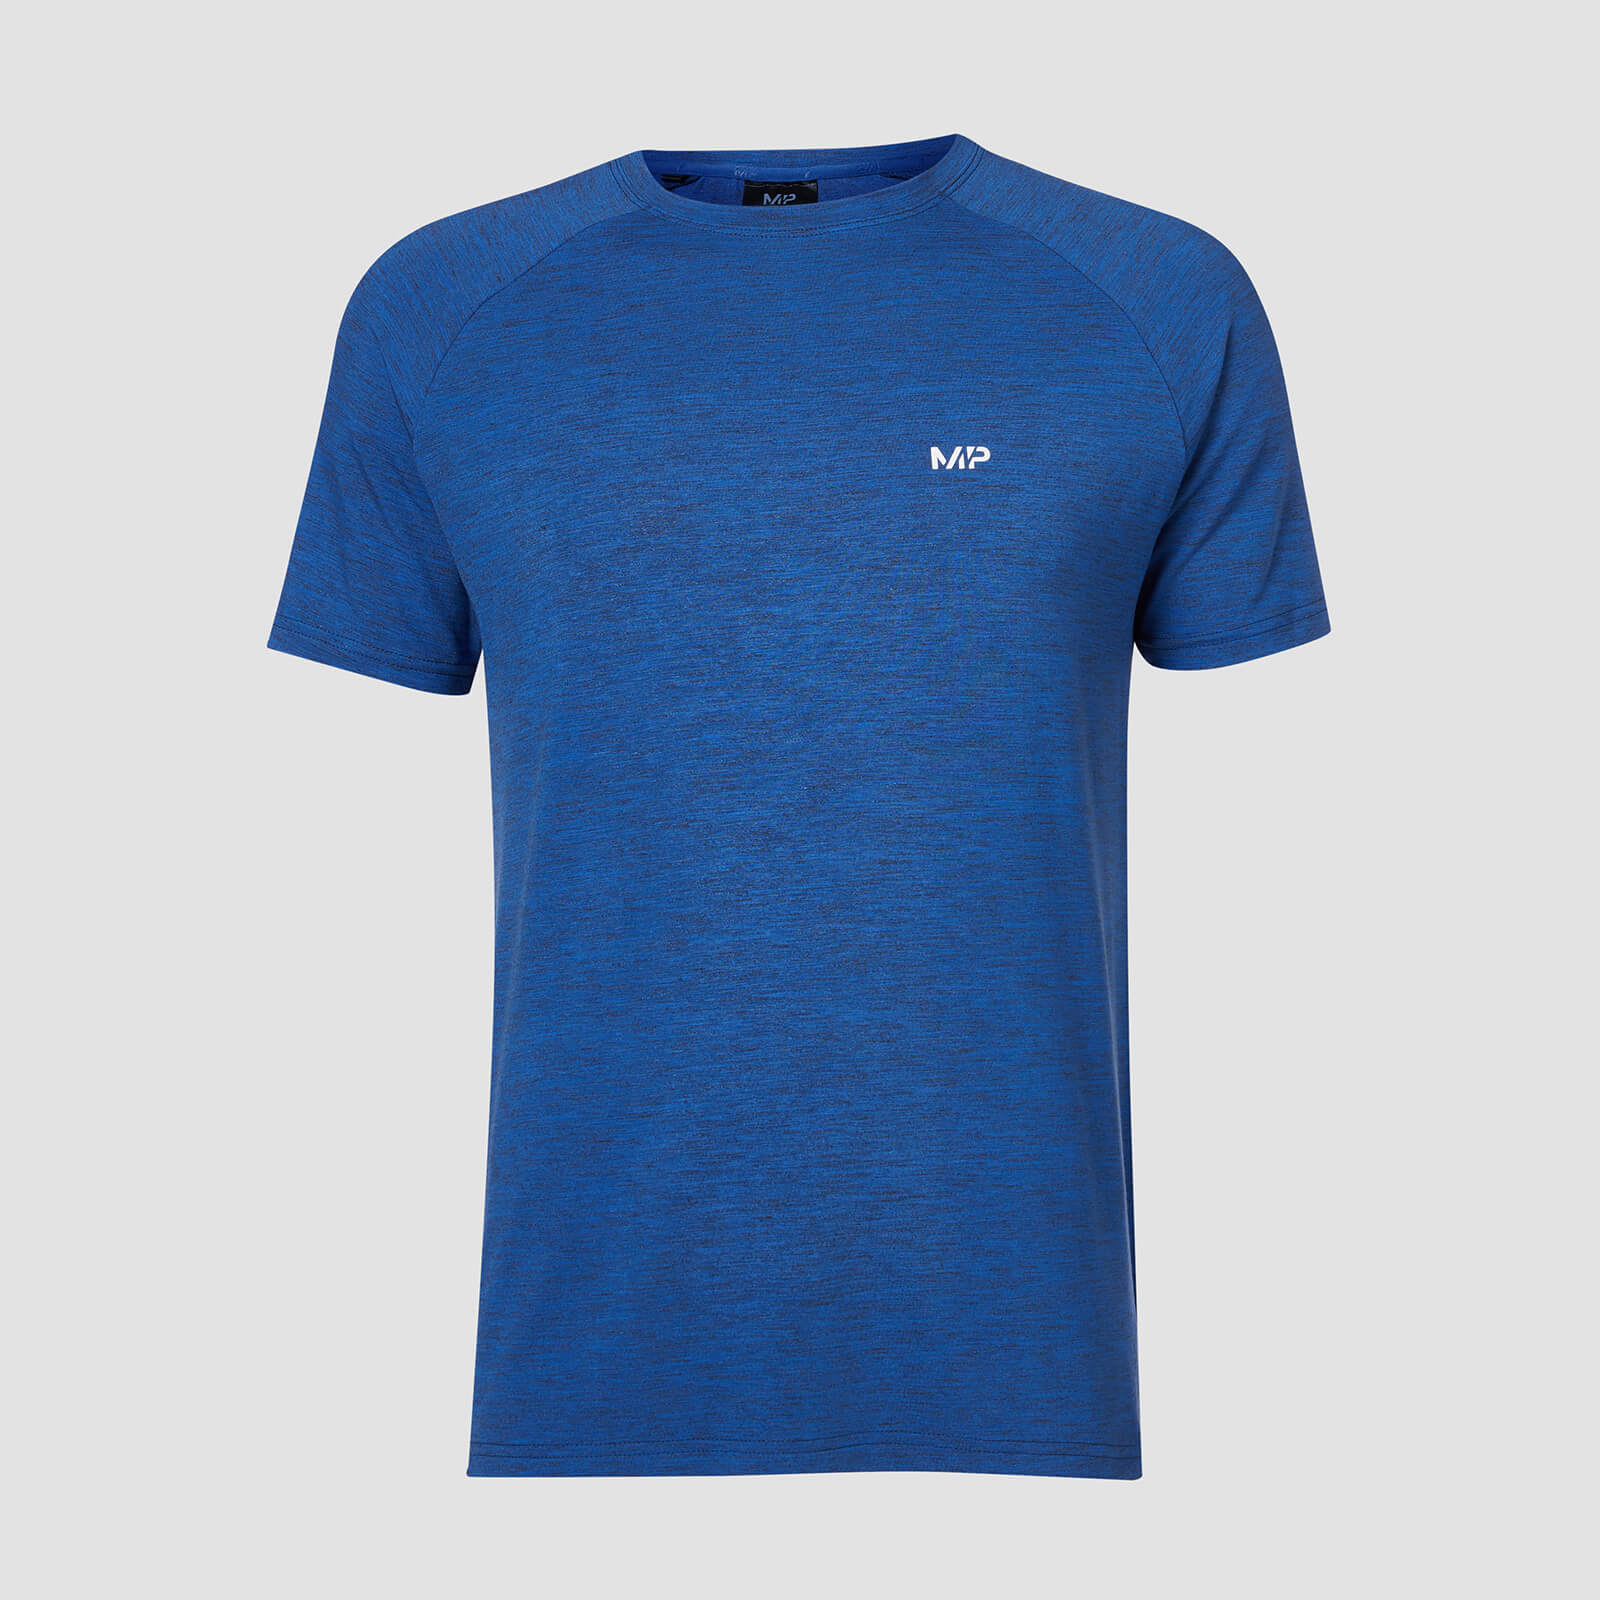 Myprotein T-shirt Performance Short Sleeve MP - Blu cobalto/Nero - L